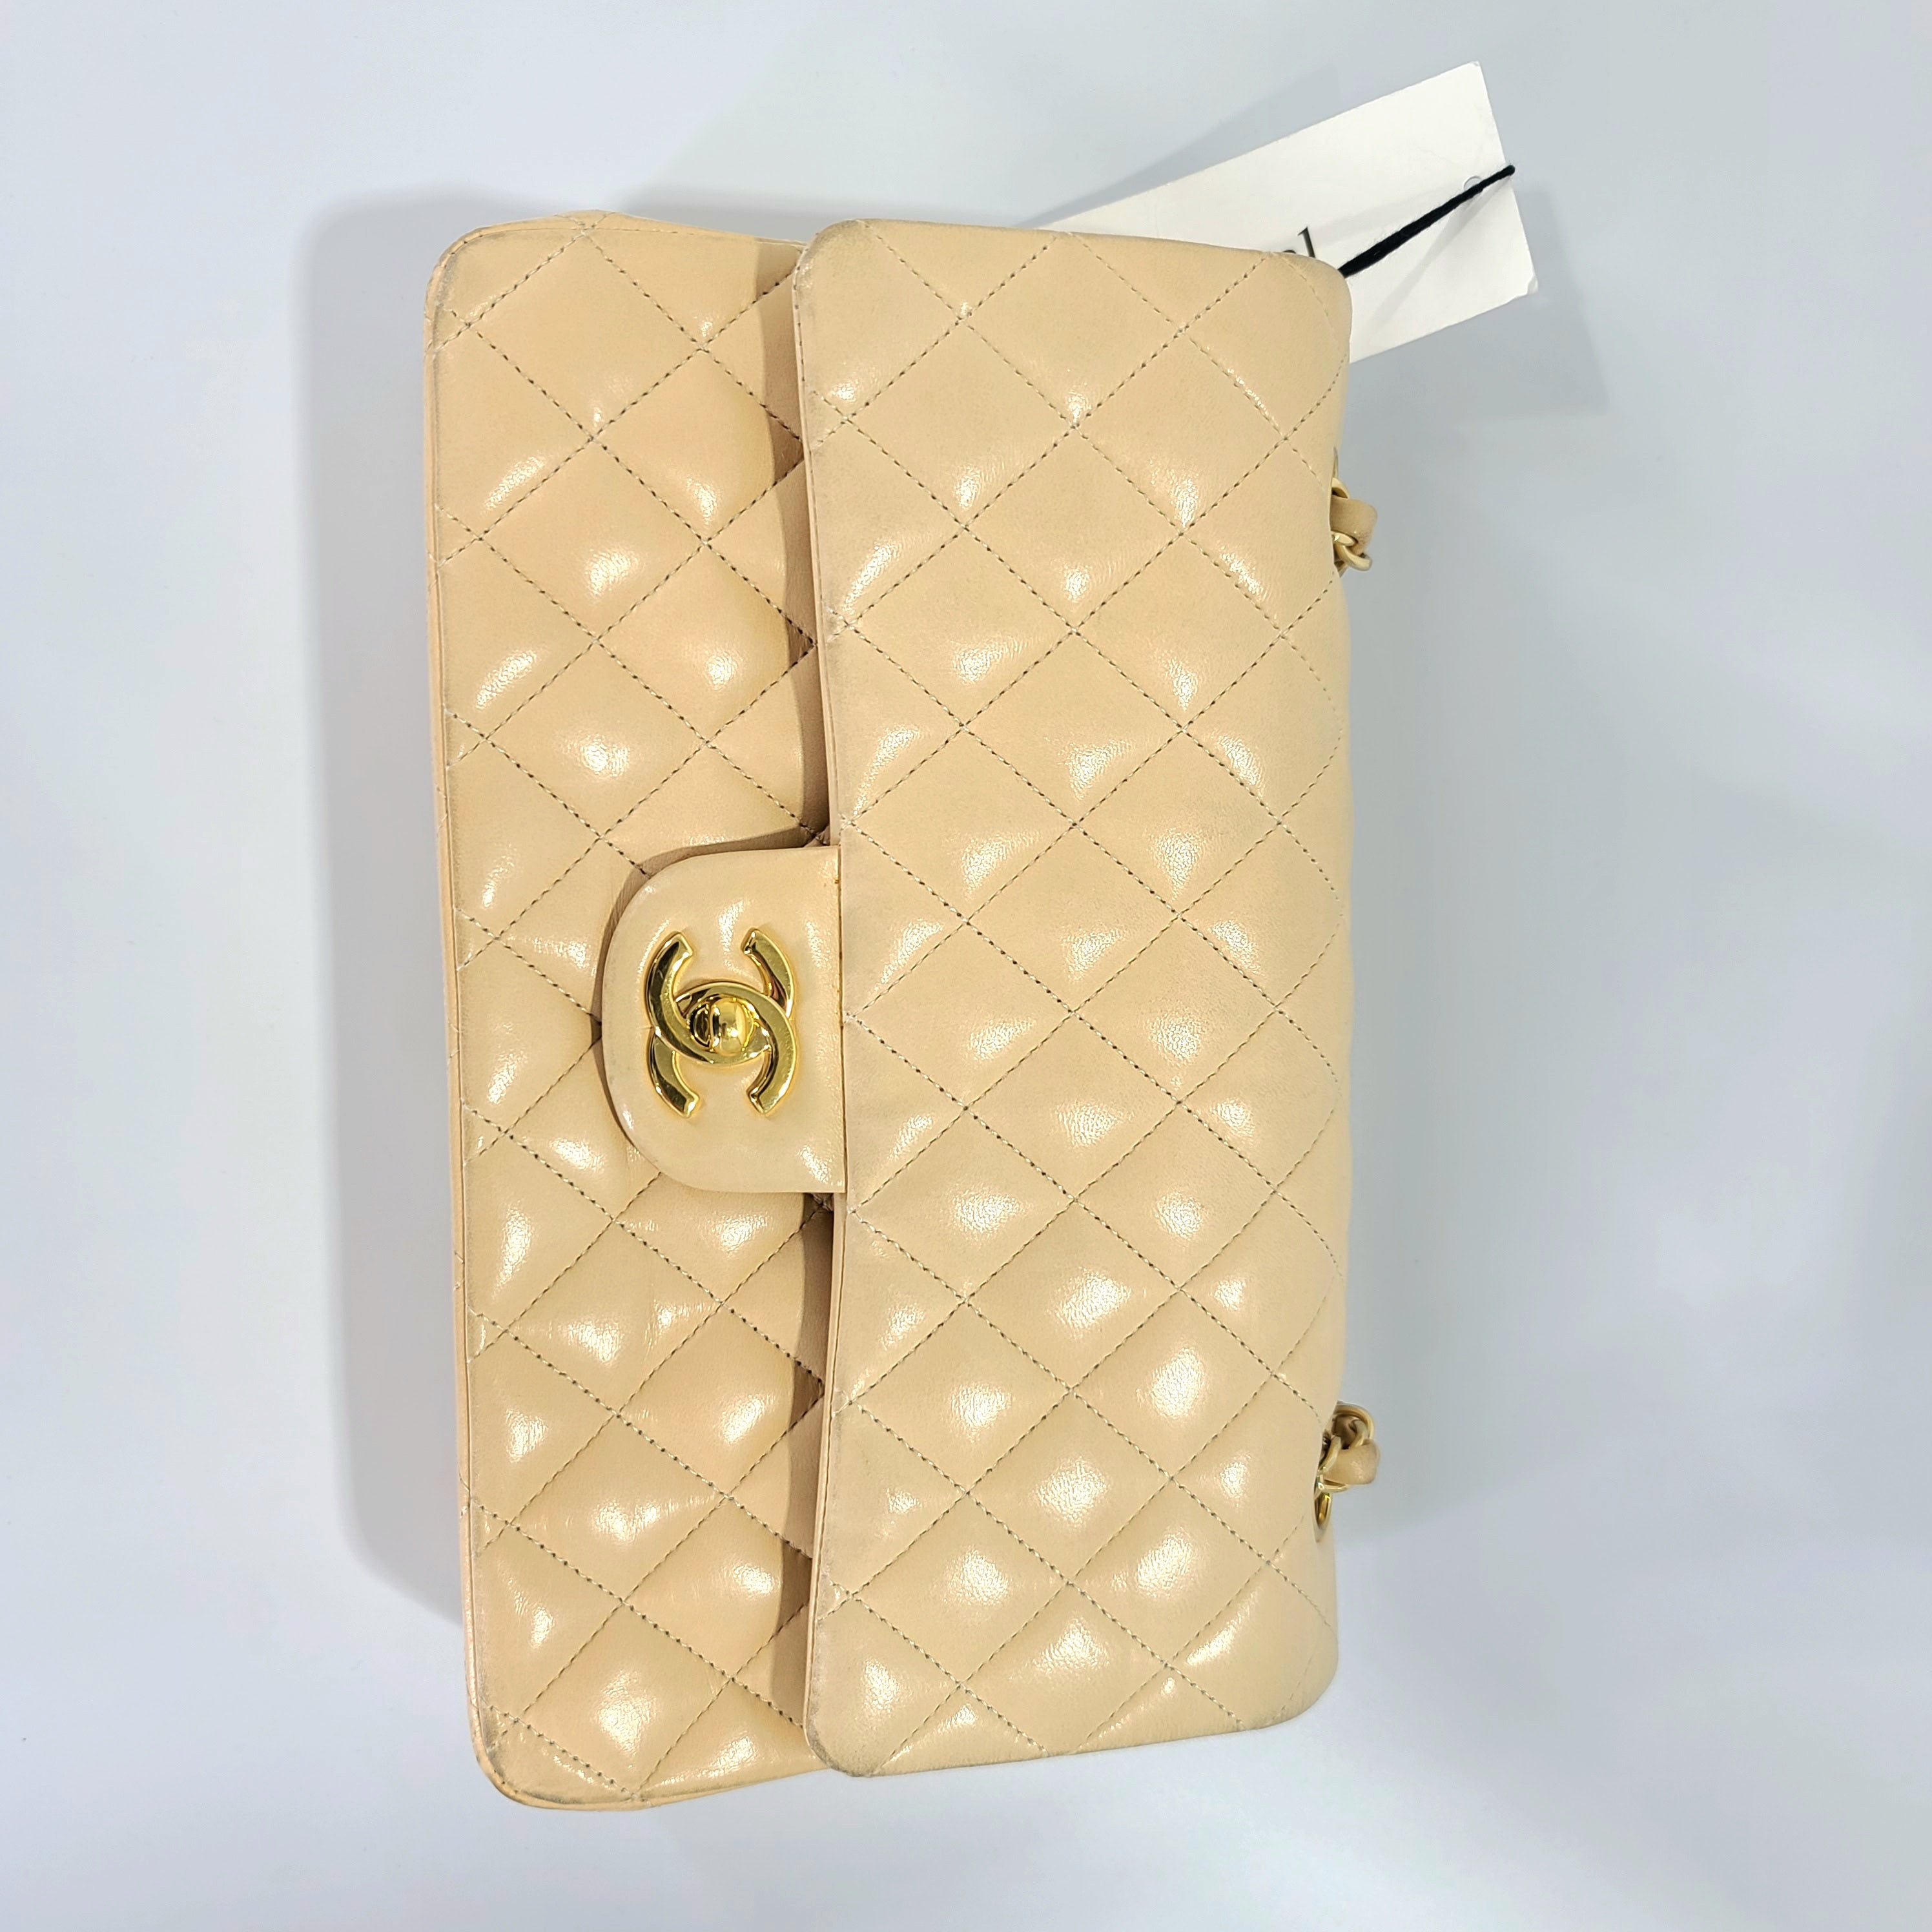 Chanel W Matrasse Flap Chain 25.5 Lambskin Beige Leather Shoulder Bag Gently used | 10.03L x 5.9W x 2.36H